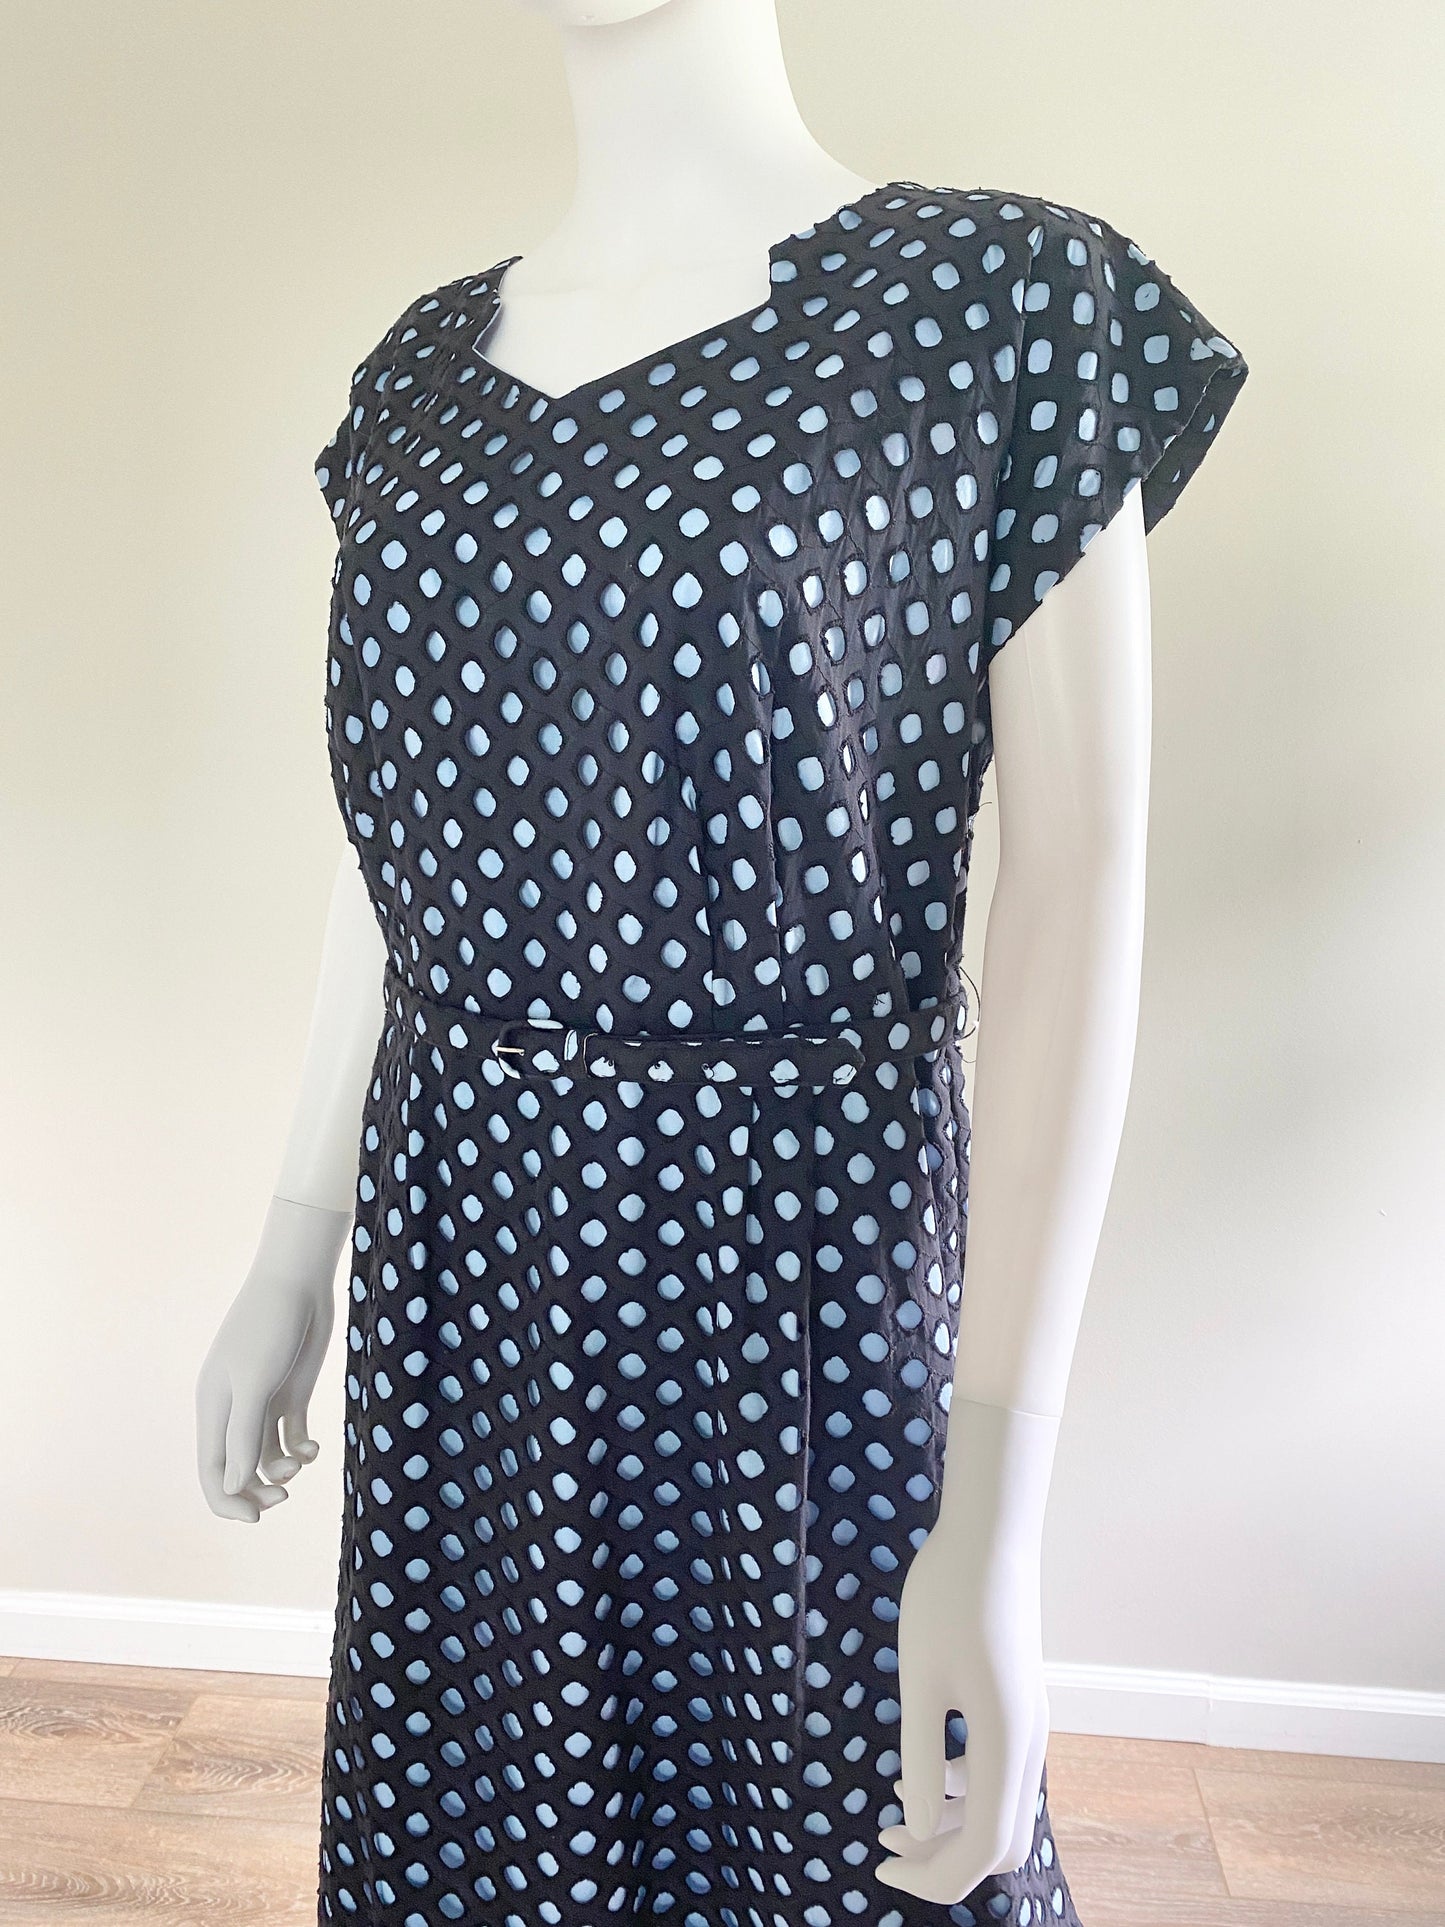 Vintage 1950s Plus Size Navy Eyelet Cotton Dress / 50s Retro Navy and Periwinkle Wiggle Dress / Size 2X